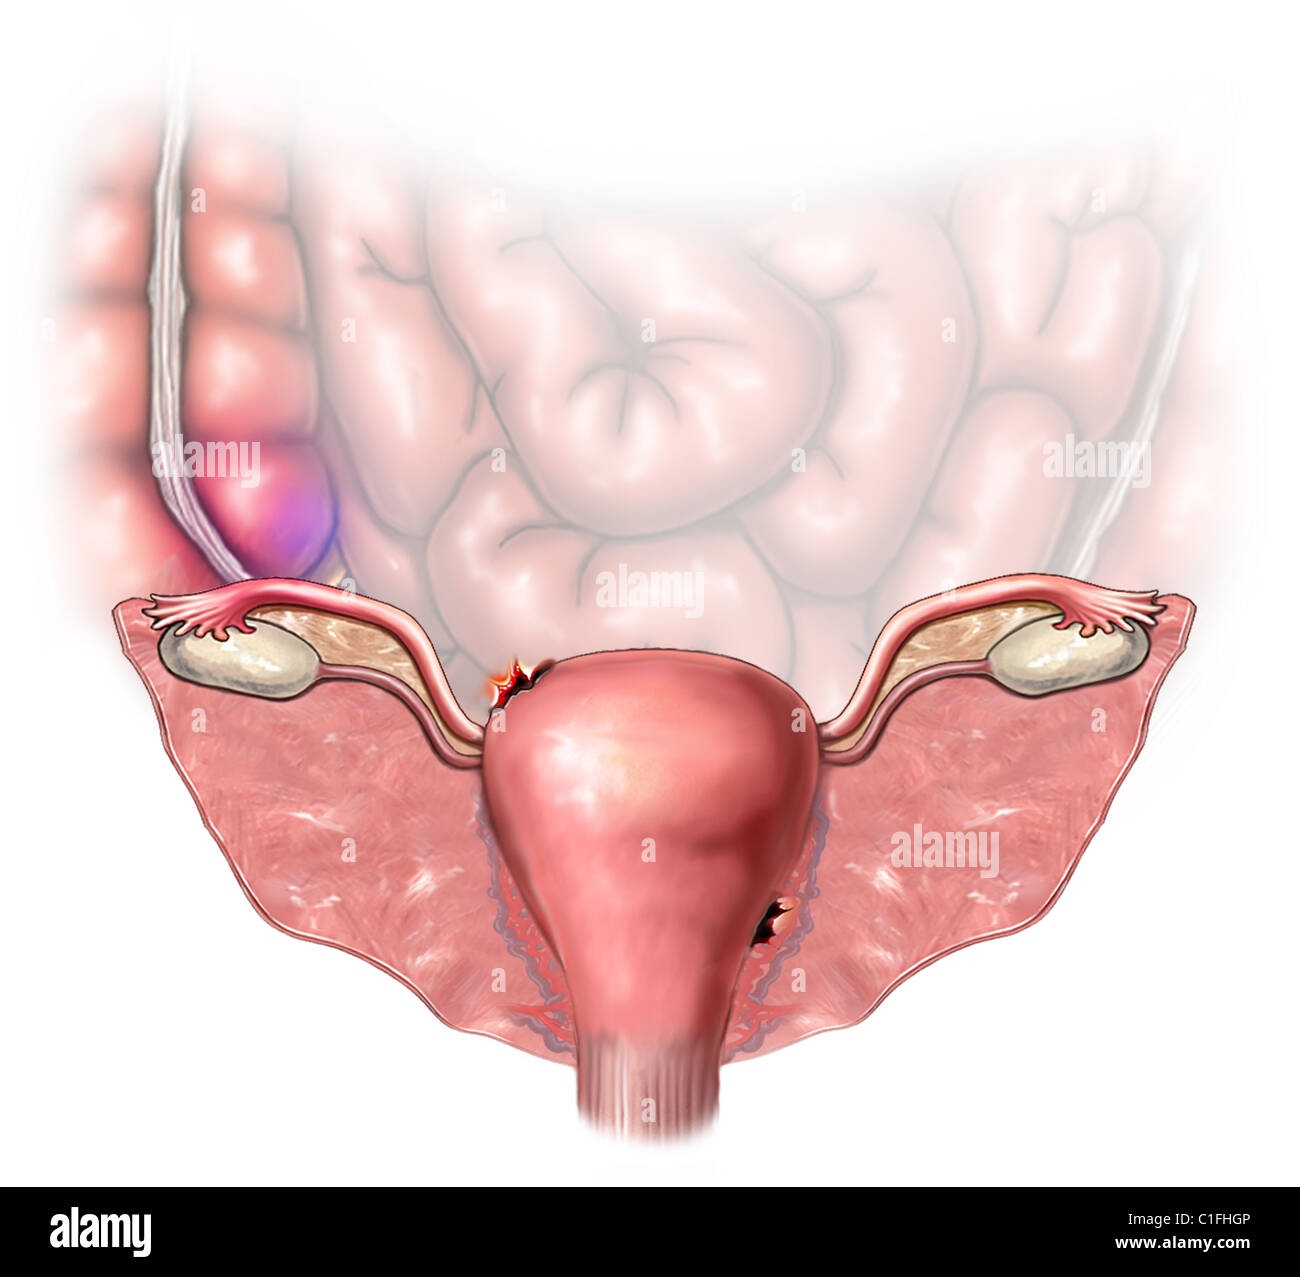 Esta ilustración médica revela un útero perforado. Foto de stock